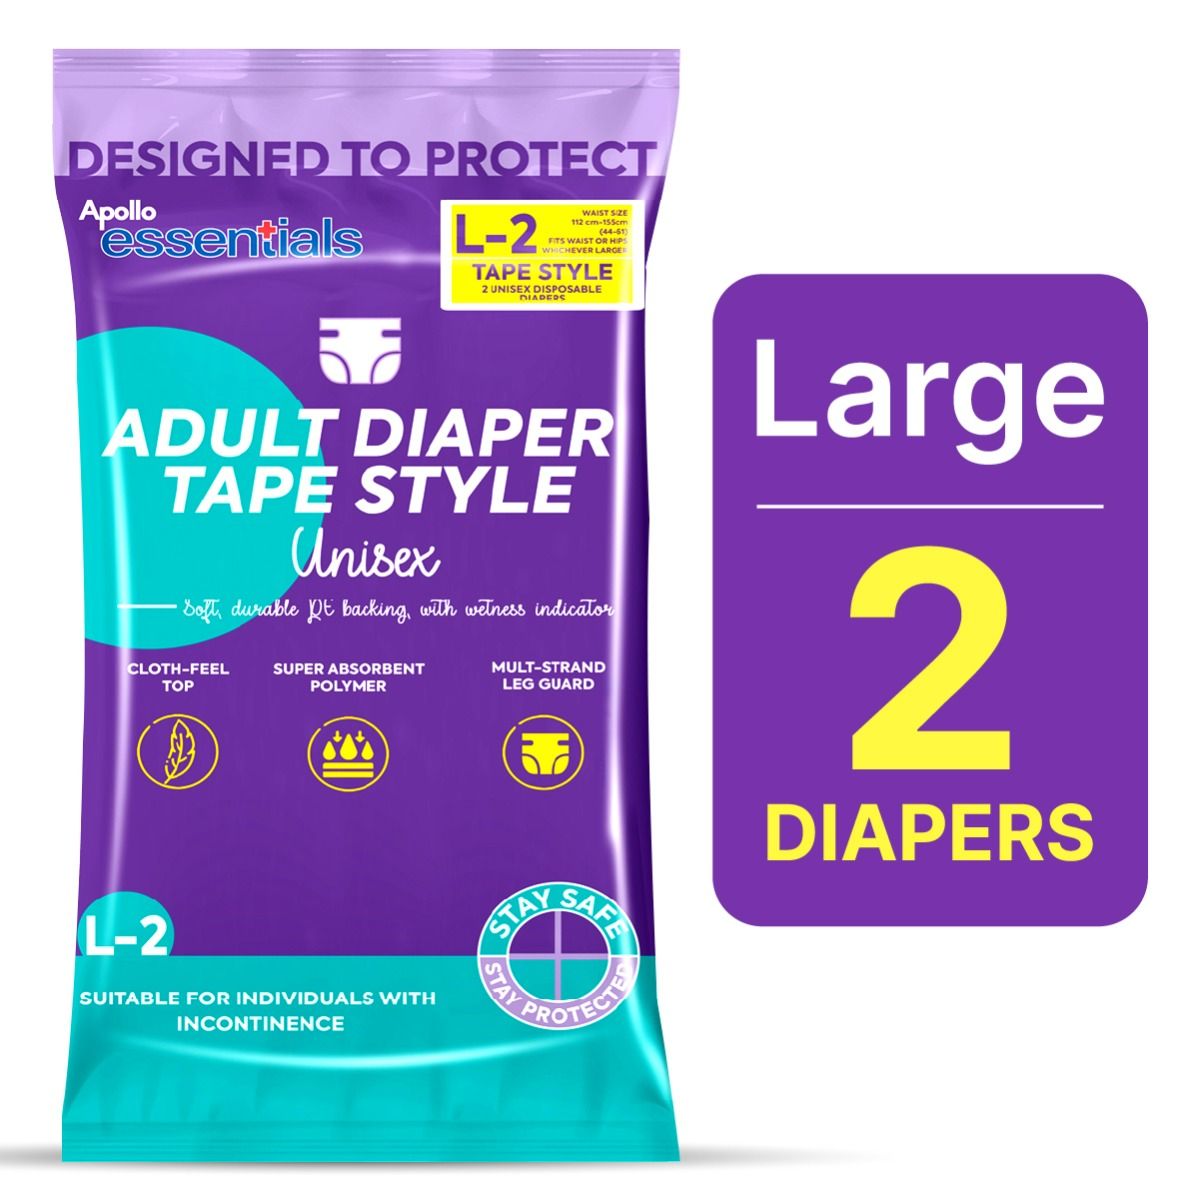 Buy Apollo Essentials Adult Diaper Tape Style Unisex Large, 2 Count Online